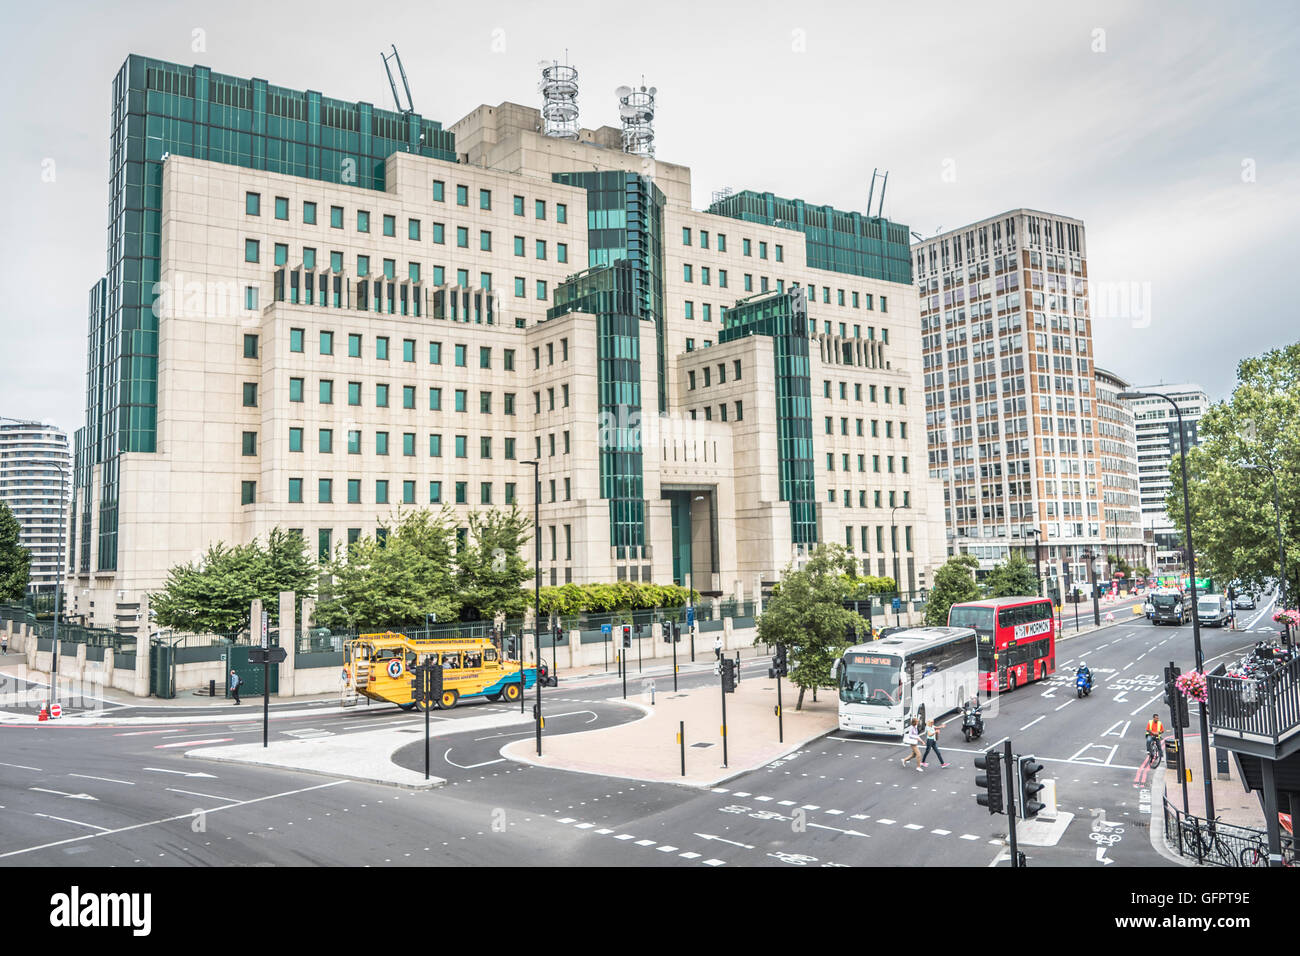 Mi6 HQ Building at Vauxhall Cross, London, UK Stock Photo